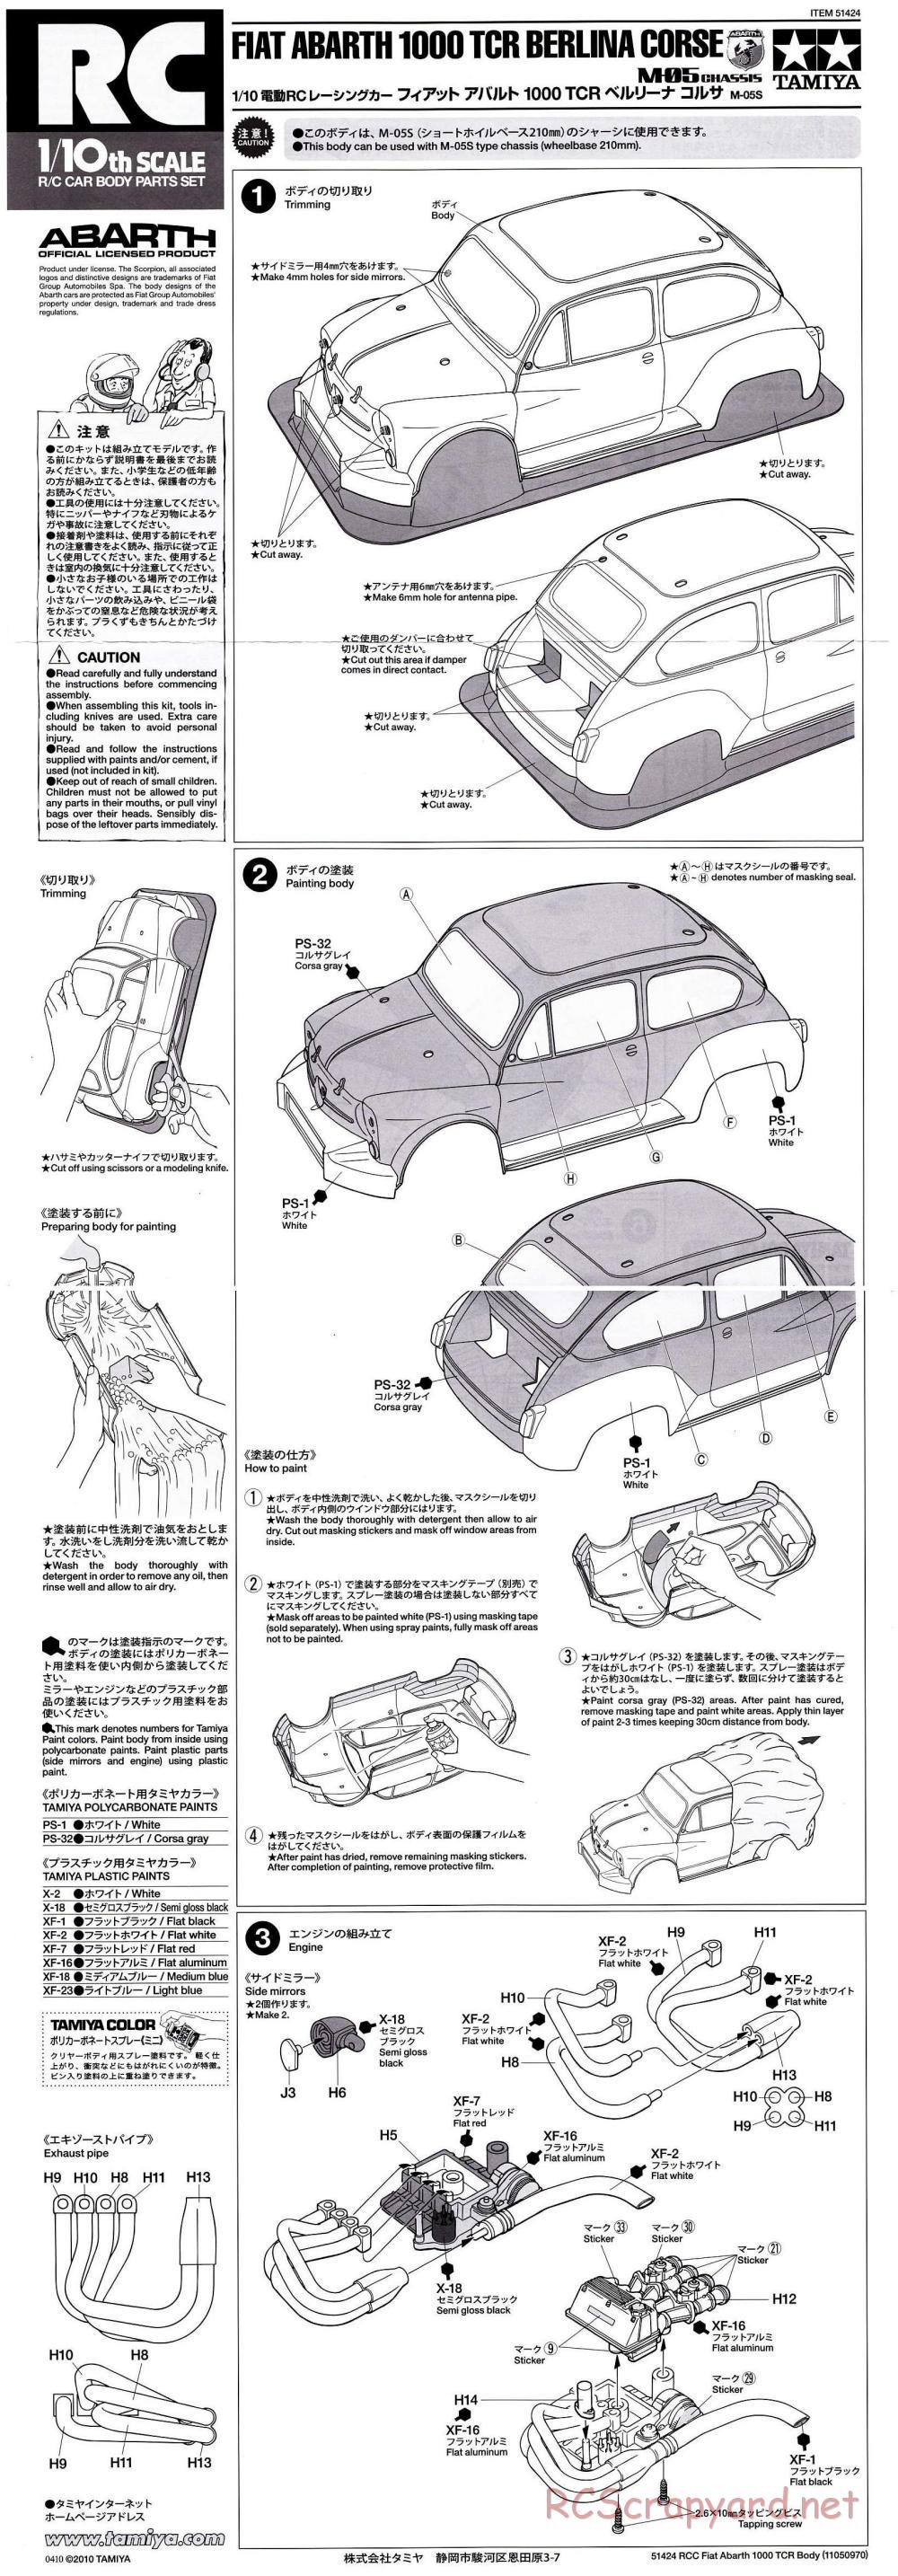 Tamiya - Fiat Abarth 1000 TCR Berlina Corse - M-05 Chassis - Body Manual - Page 1